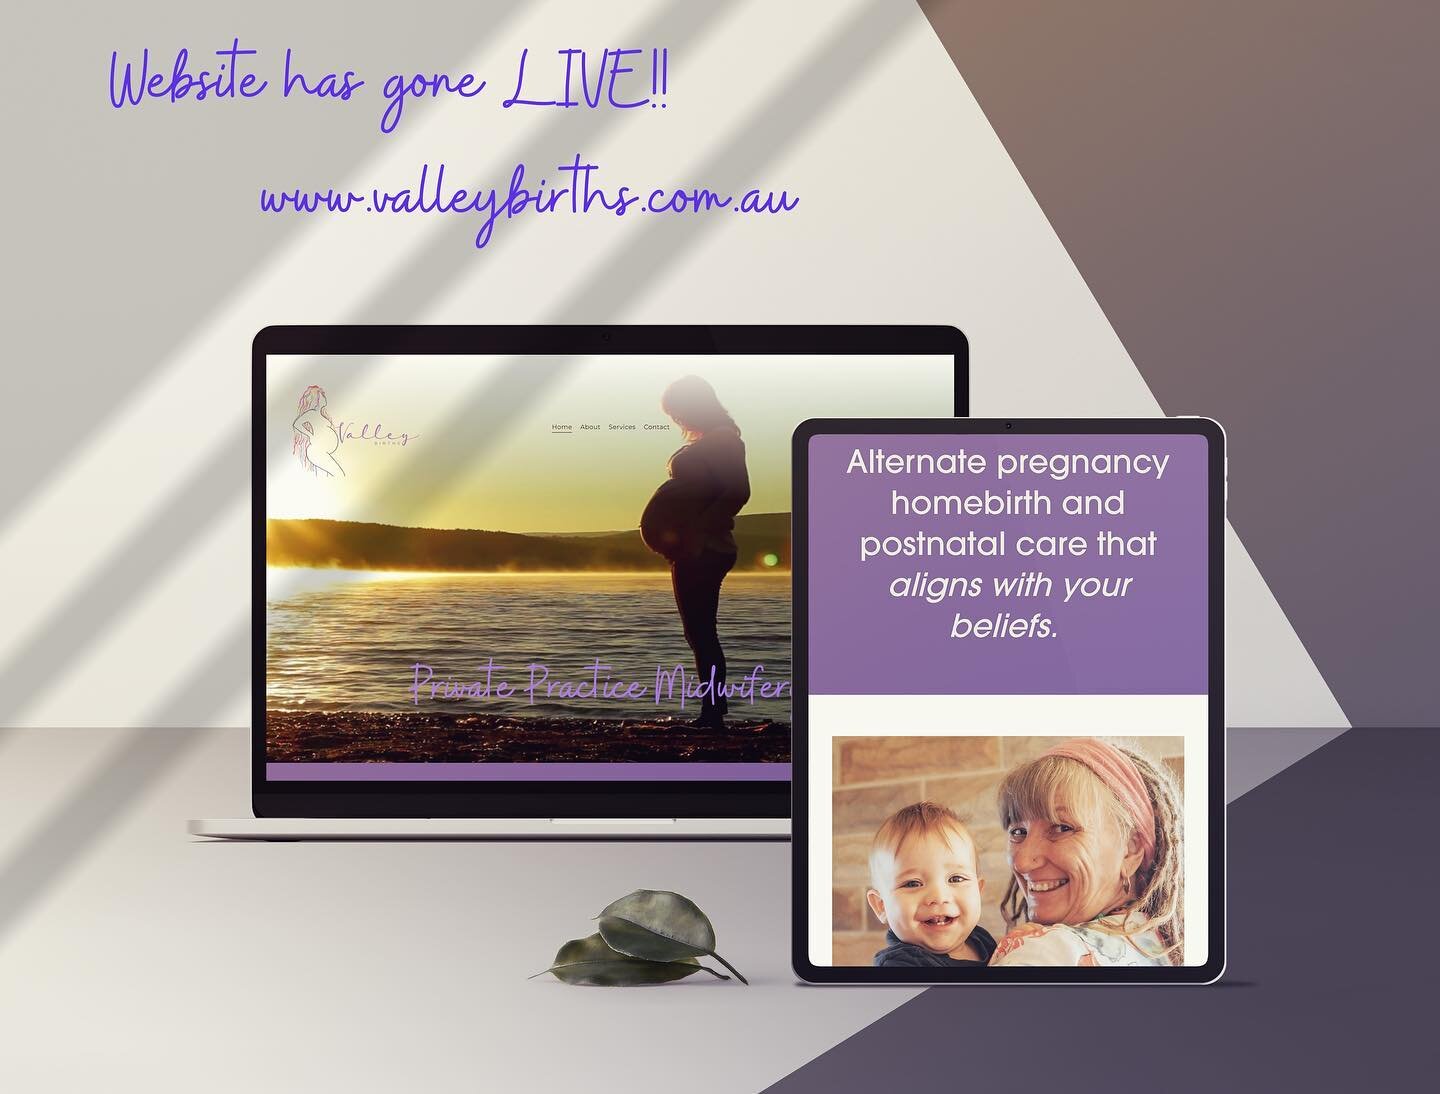 Website is LIVE!
www.valleybirths.com.au
Link in Bio!
Thanks to Sheri. @slidin_studio